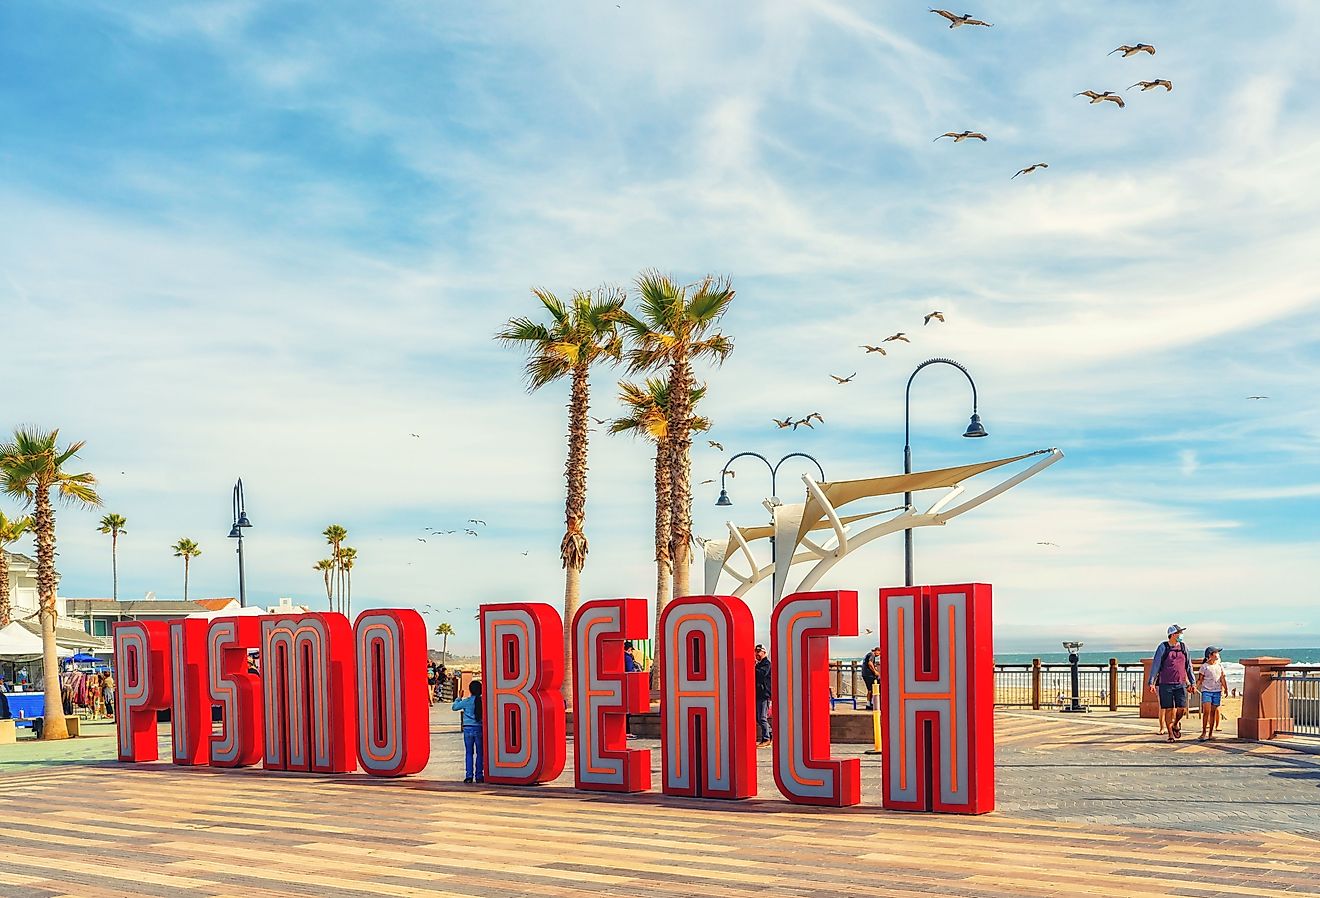 Pismo Beach Pier plaza. The large light-up letters, a new neon landmark of Pismo Beach city, California. Image credit HannaTor via Shutterstock.